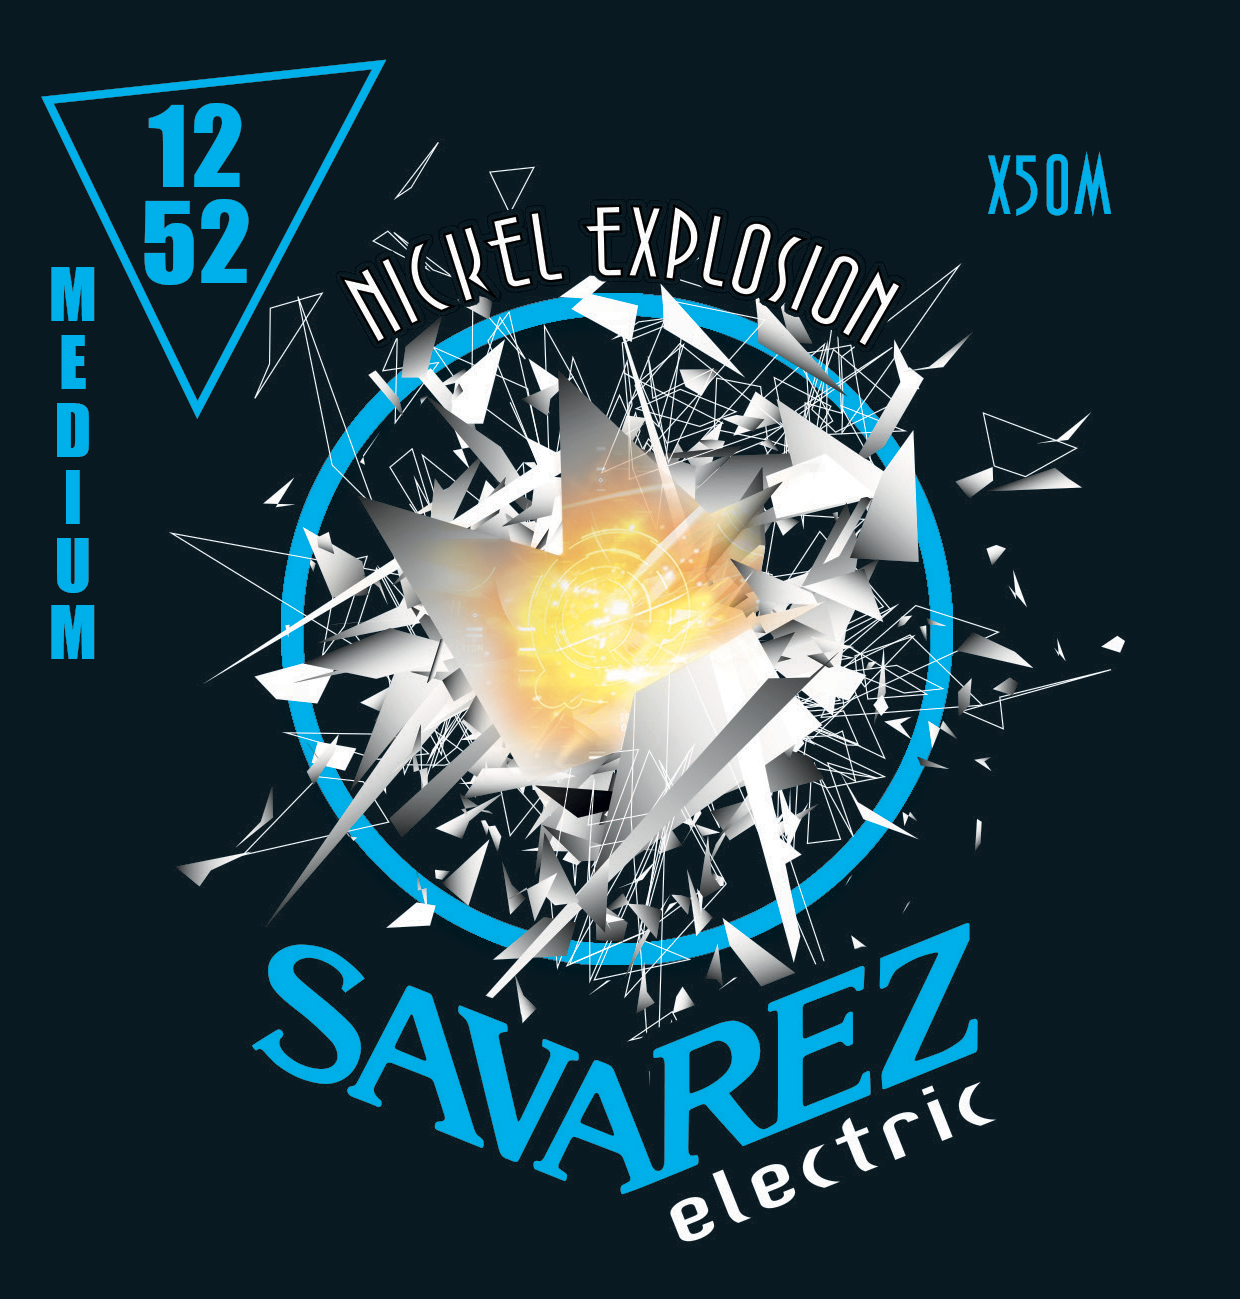 SAVAREZ ELECTRIC NICKEL EXPLOSION X50M